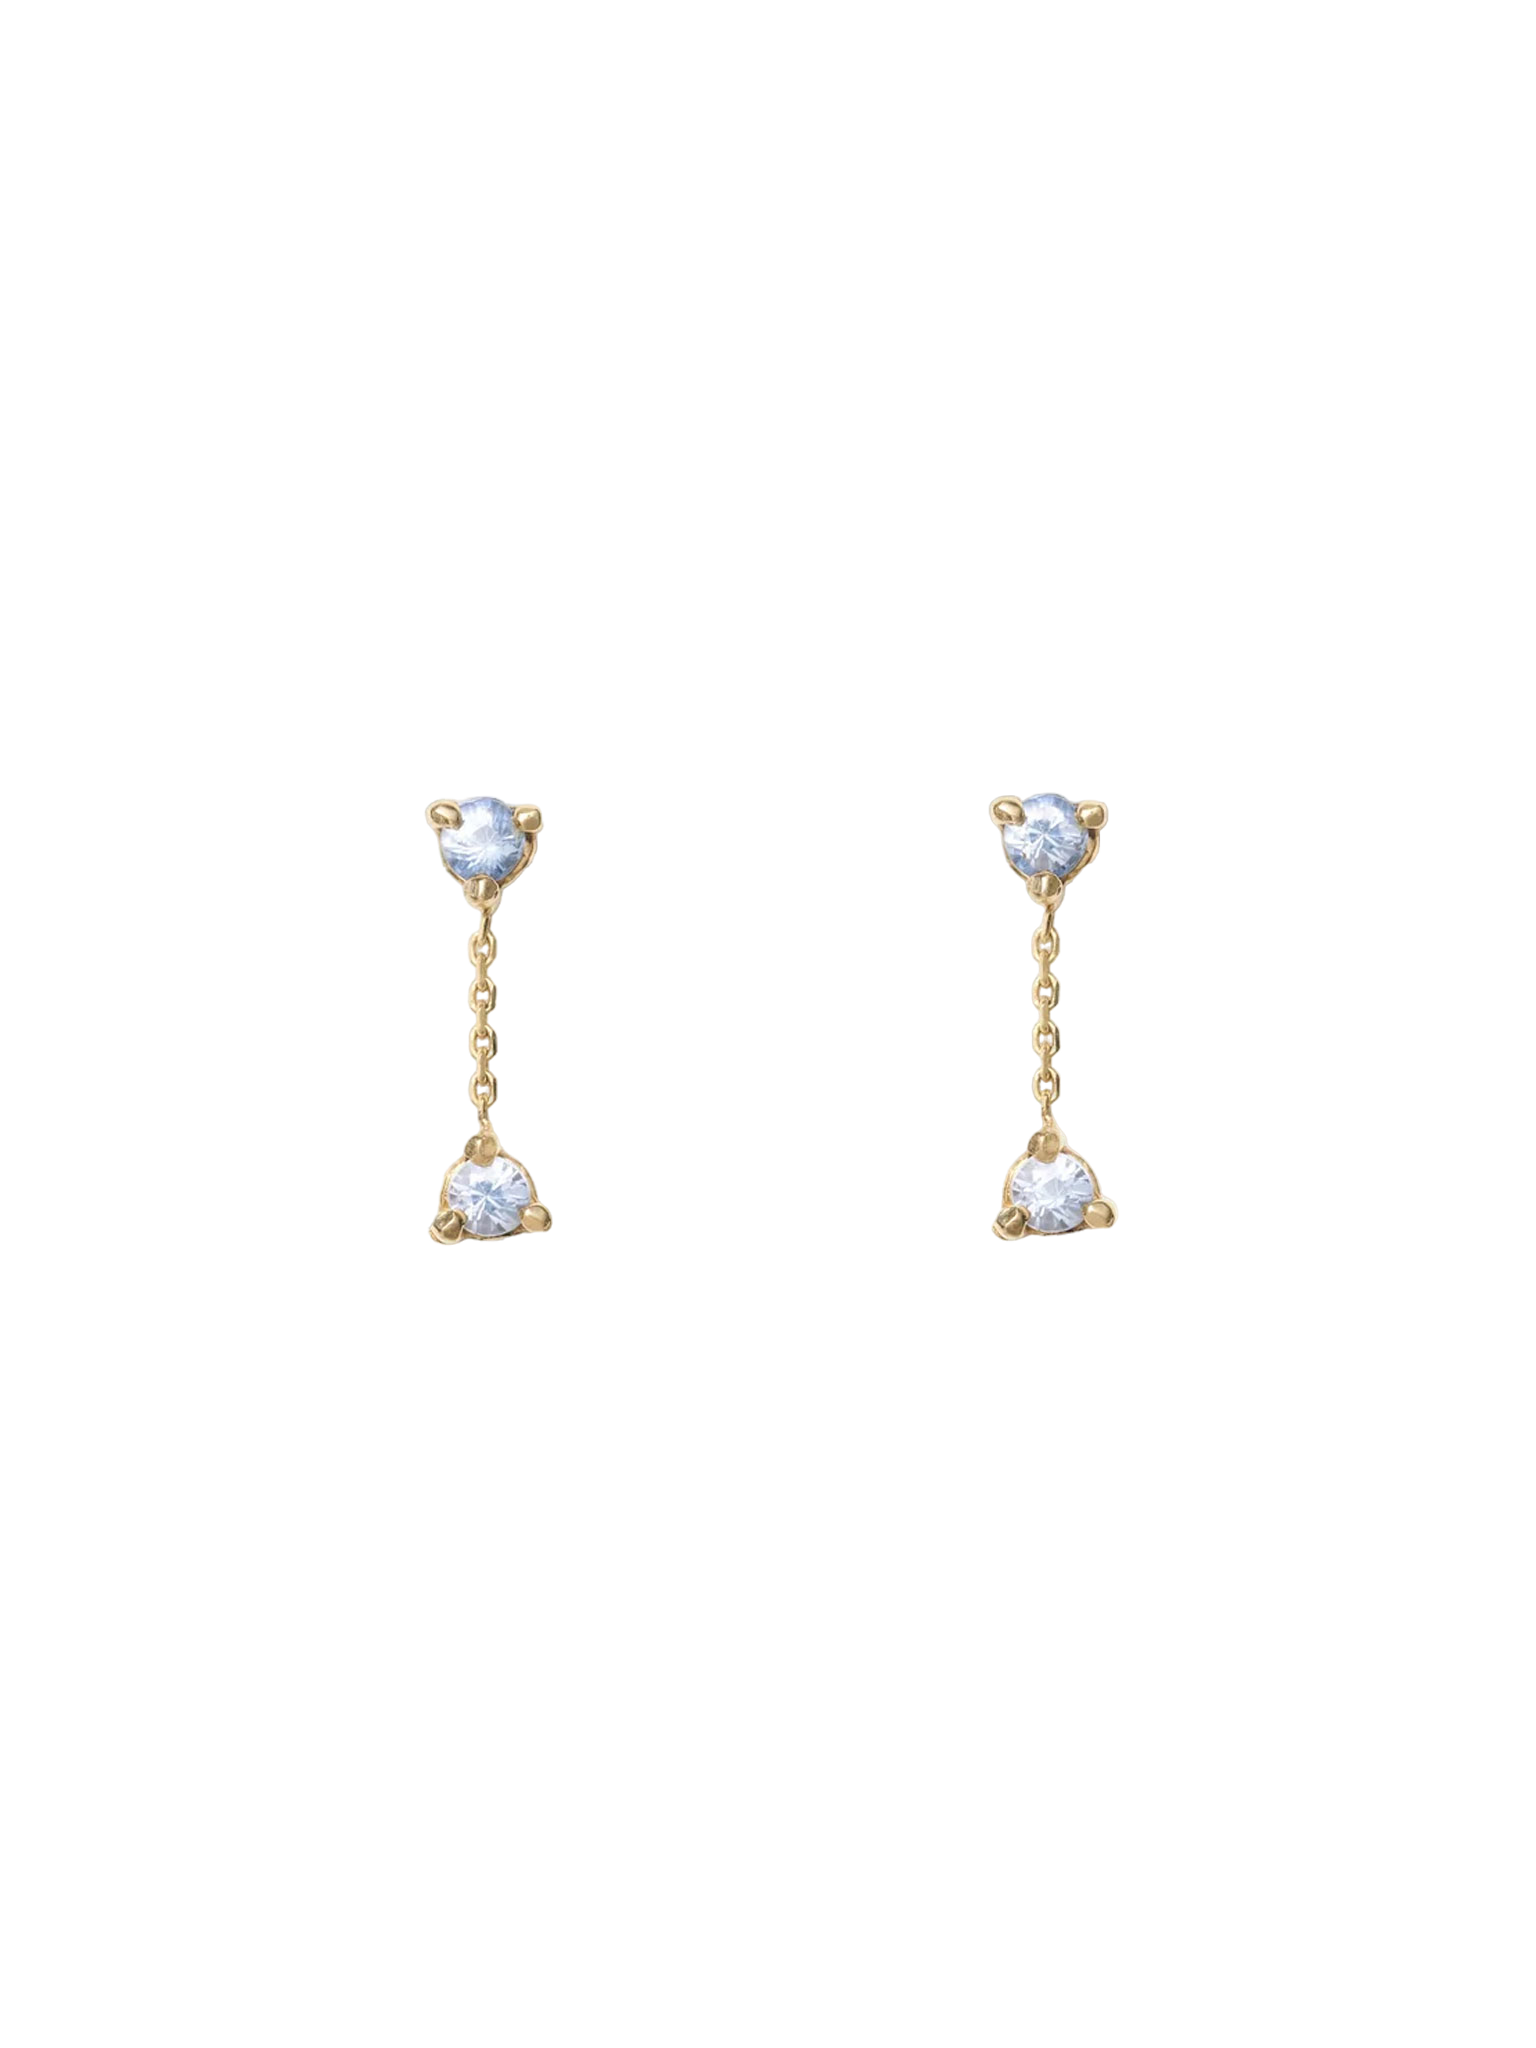 Tonal small two-step chain earrings